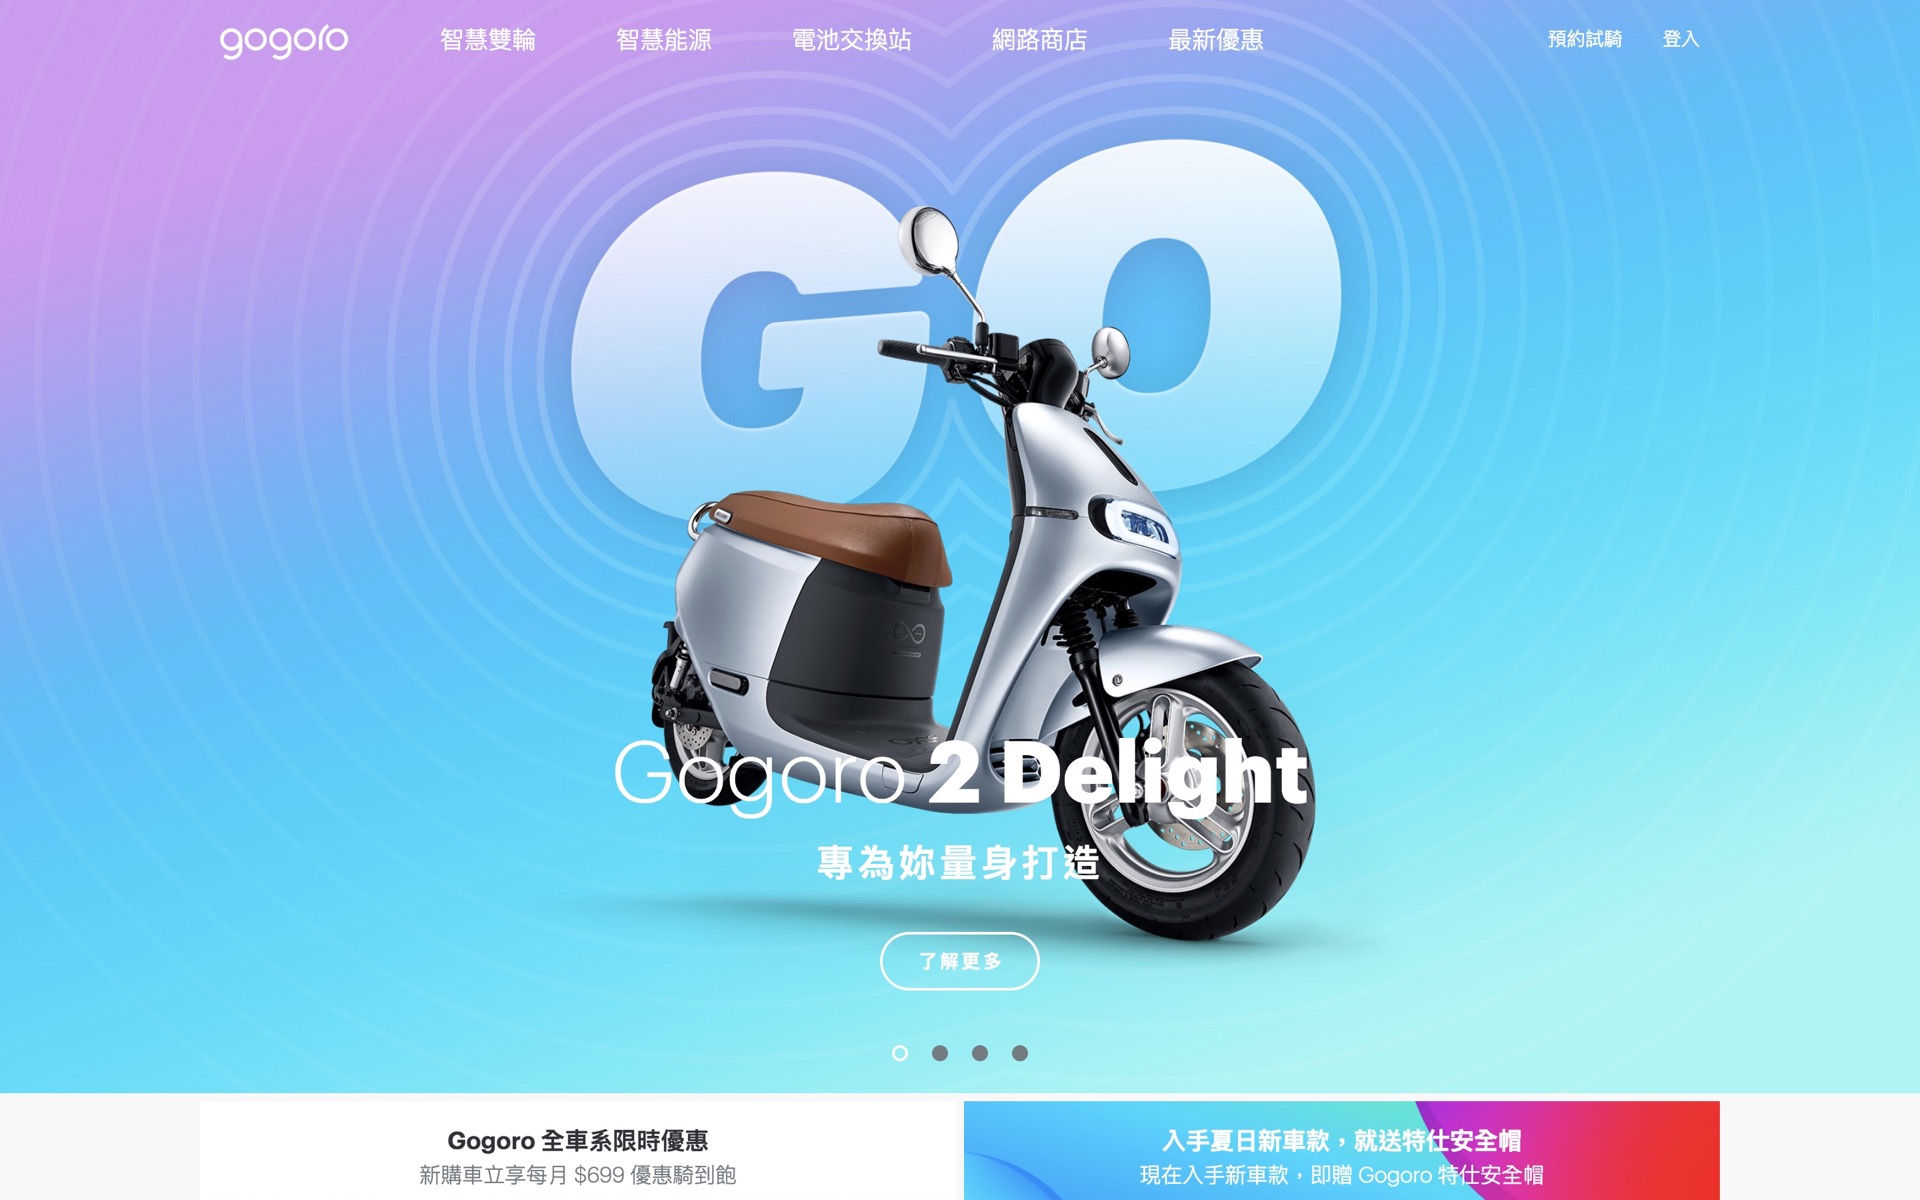 Gogoro 2 Delight 的官方網頁介紹